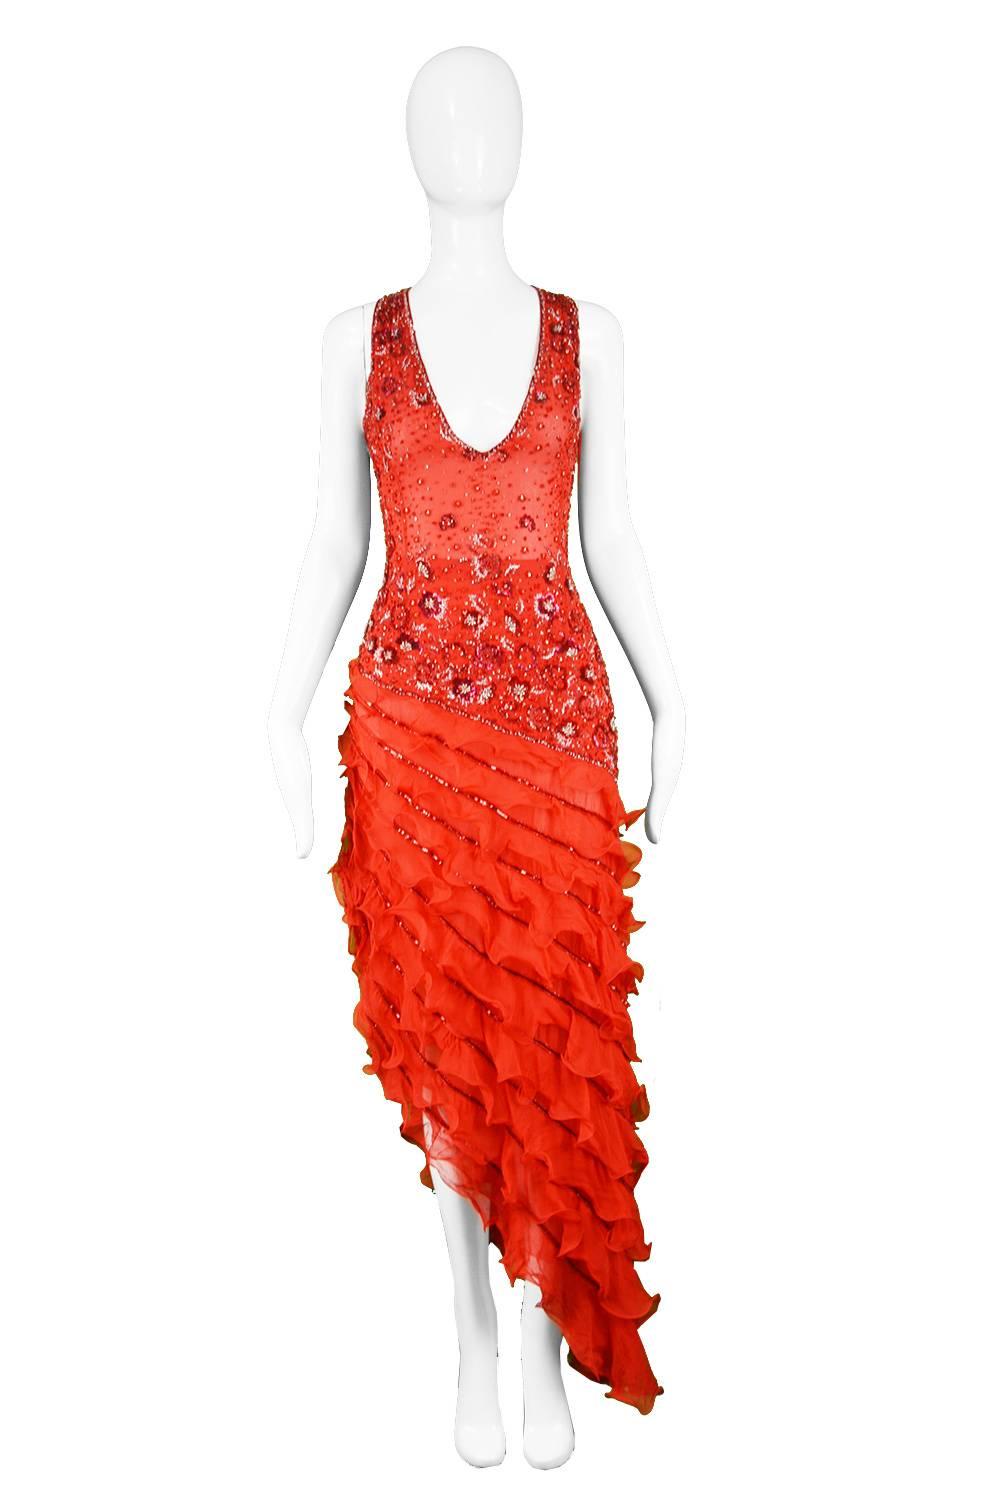 Renato Balestra Italian Haute Couture Beaded Red Silk Flamenco Gown, A/W 1997

Estimated Size: UK 6-8/ US 2-4/ EU 34-36. Please check meaurements
Bust - 32” / 81cm
Waist - 25.5” / 64cm
Hips - 36” / 91cm
Length (Shoulder to Hem) - 60” /